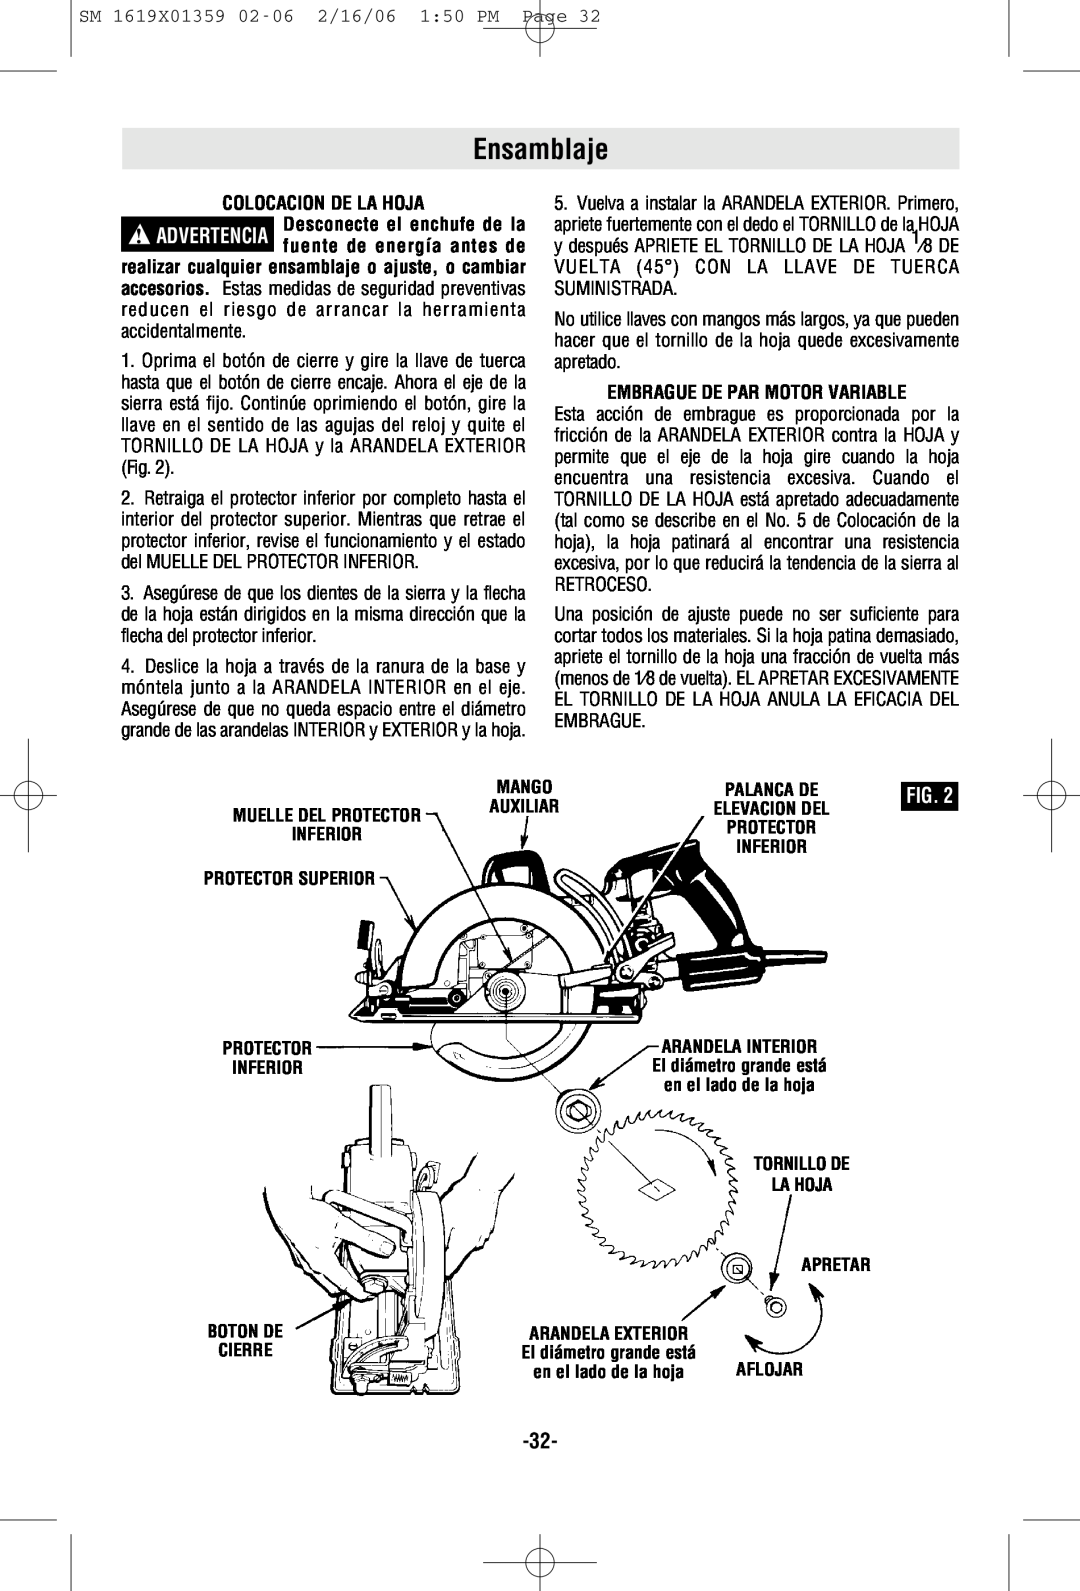 Skil HD5860 manual Ensamblaje, Colocacion De La Hoja, Embrague De Par Motor Variable 